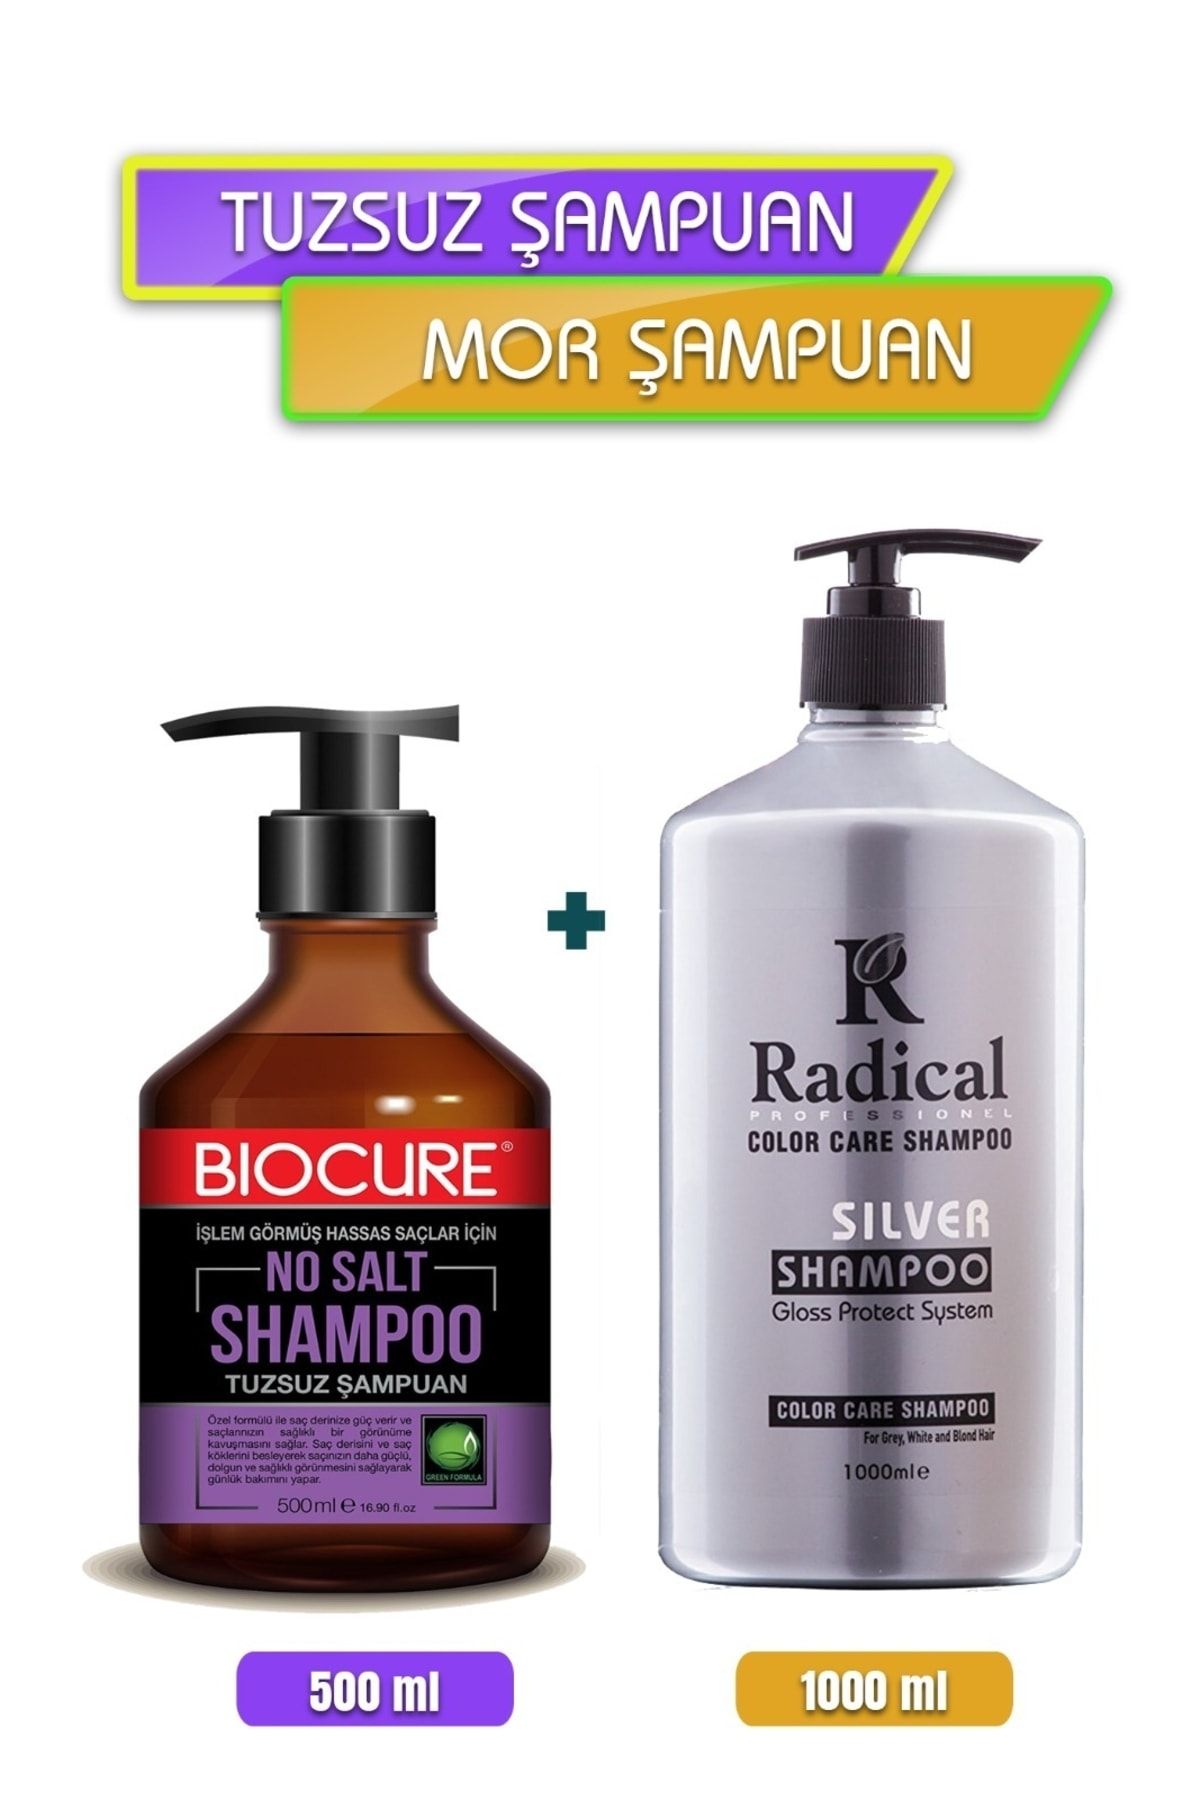 Biocure Colo Care Yansıma ve Turunculaşma Önleyici Sılver Mor Şampuan 1000 ml+ Tuzsuz Şampuan 500 ml